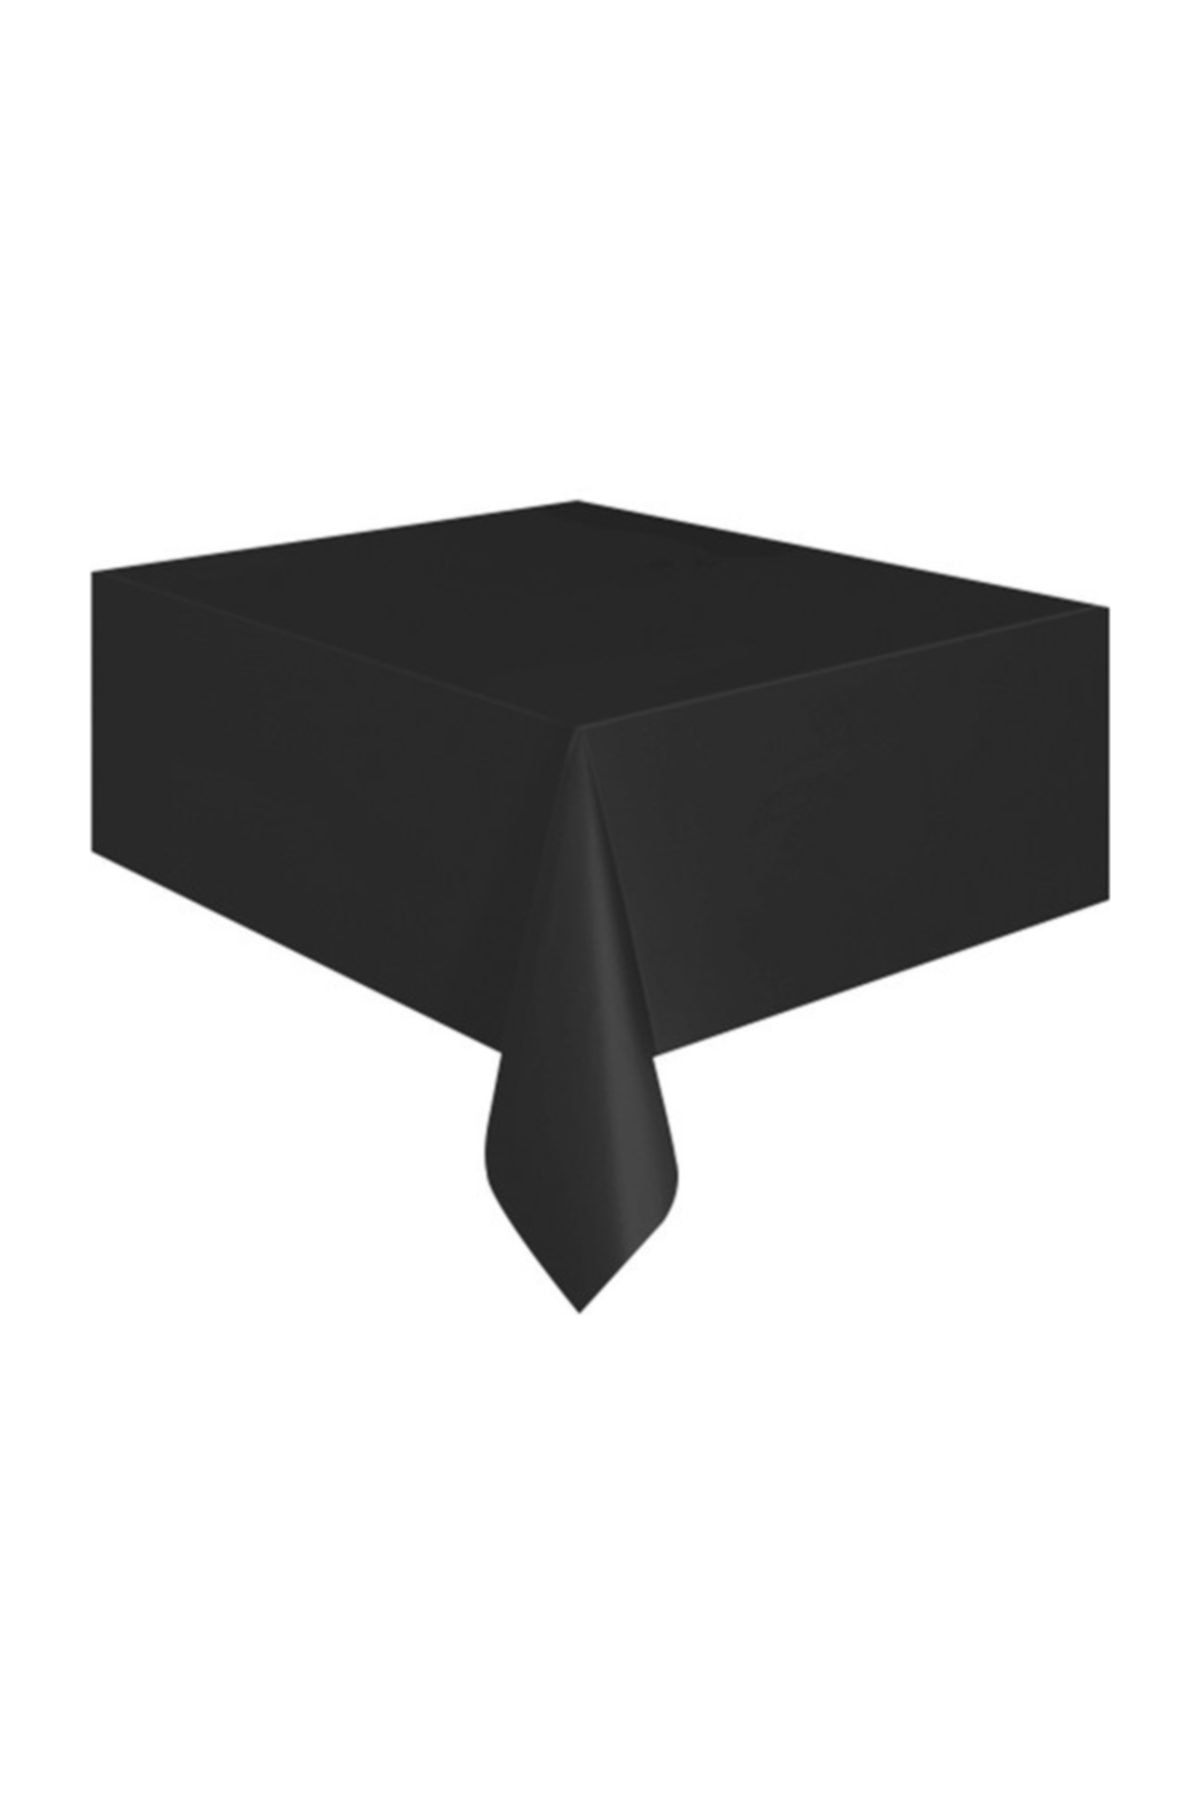 Cansüs Plastik Masa Örtüsü Siyah  120x180cm -1 Adet